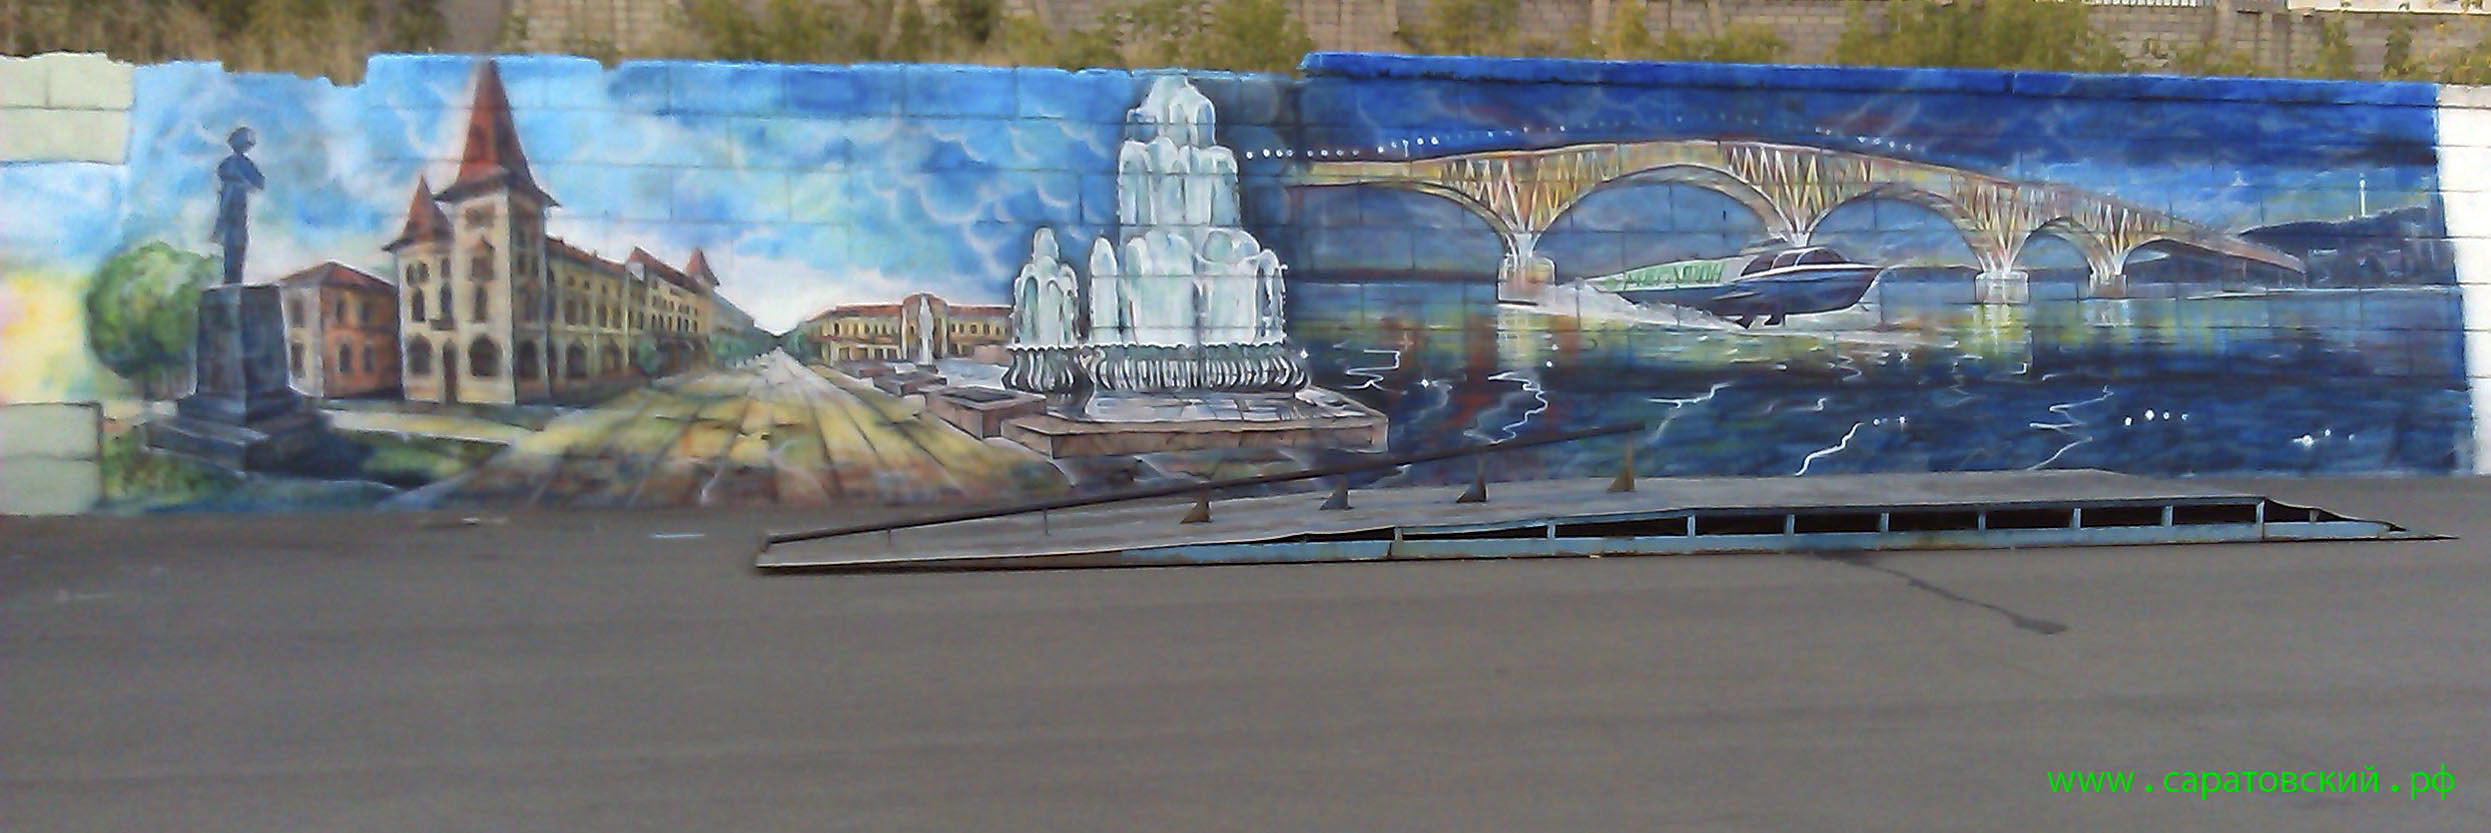 Saratov embankment graffiti: Saratov Kirova Avenue and a bridge over the Volga River, Russia